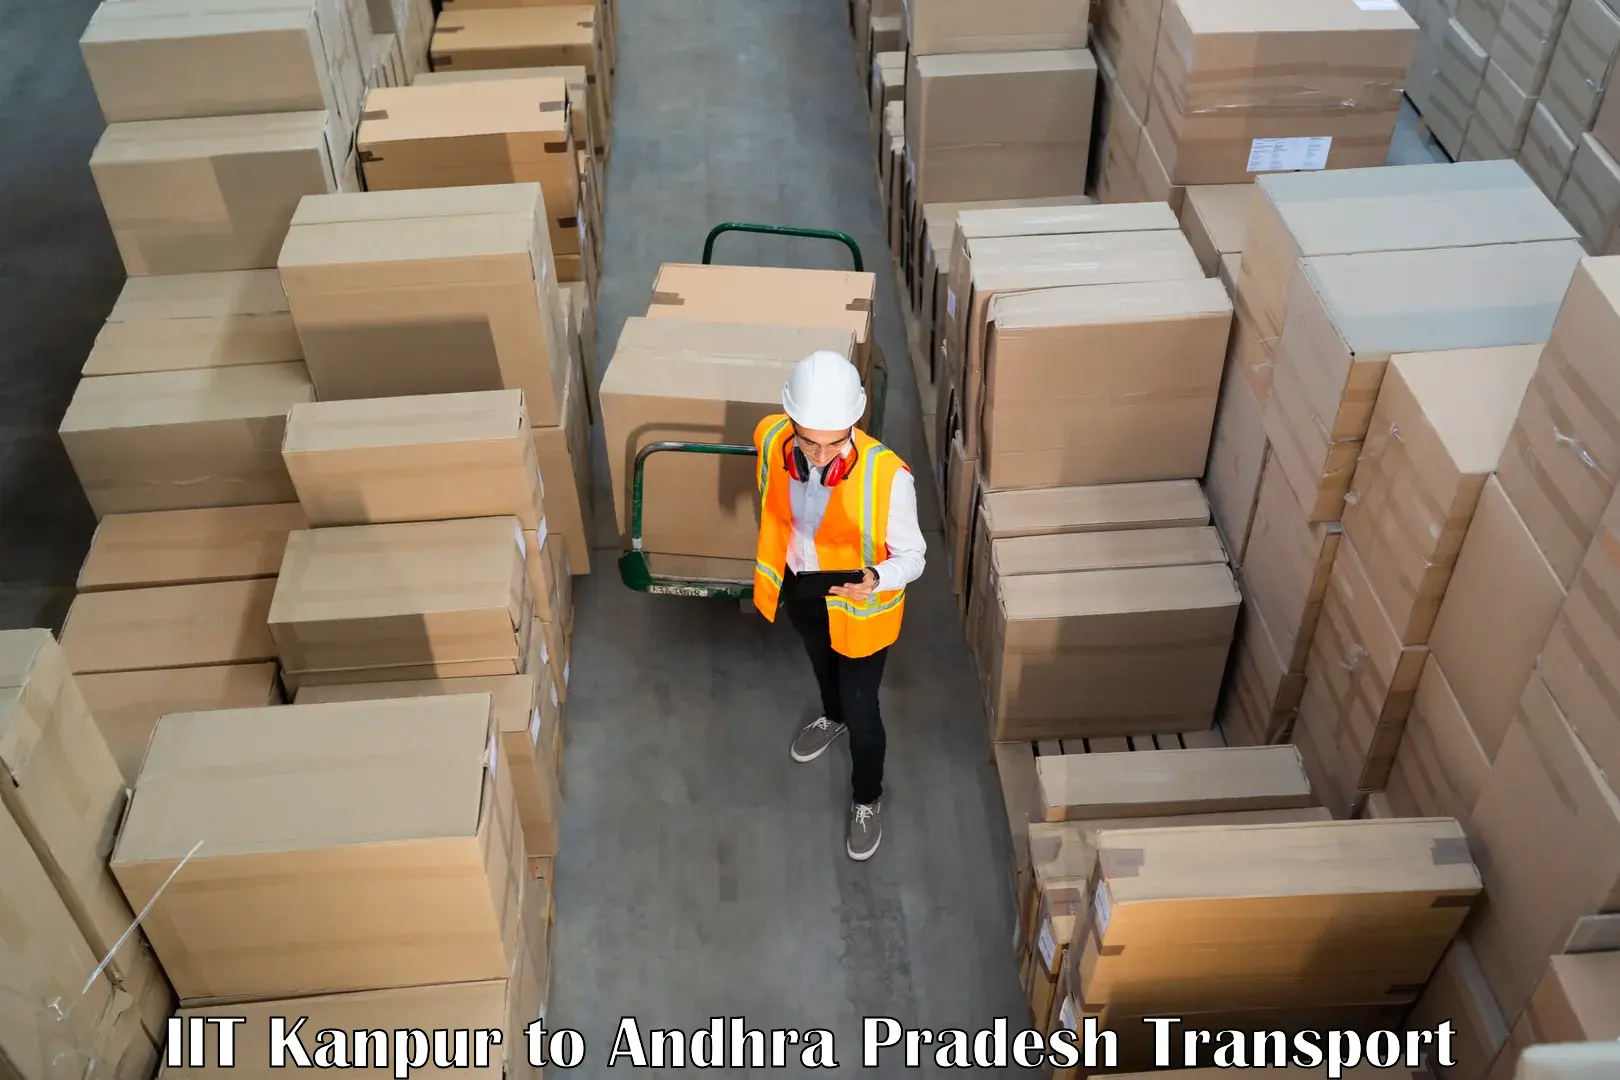 Part load transport service in India IIT Kanpur to Tadikalapudi